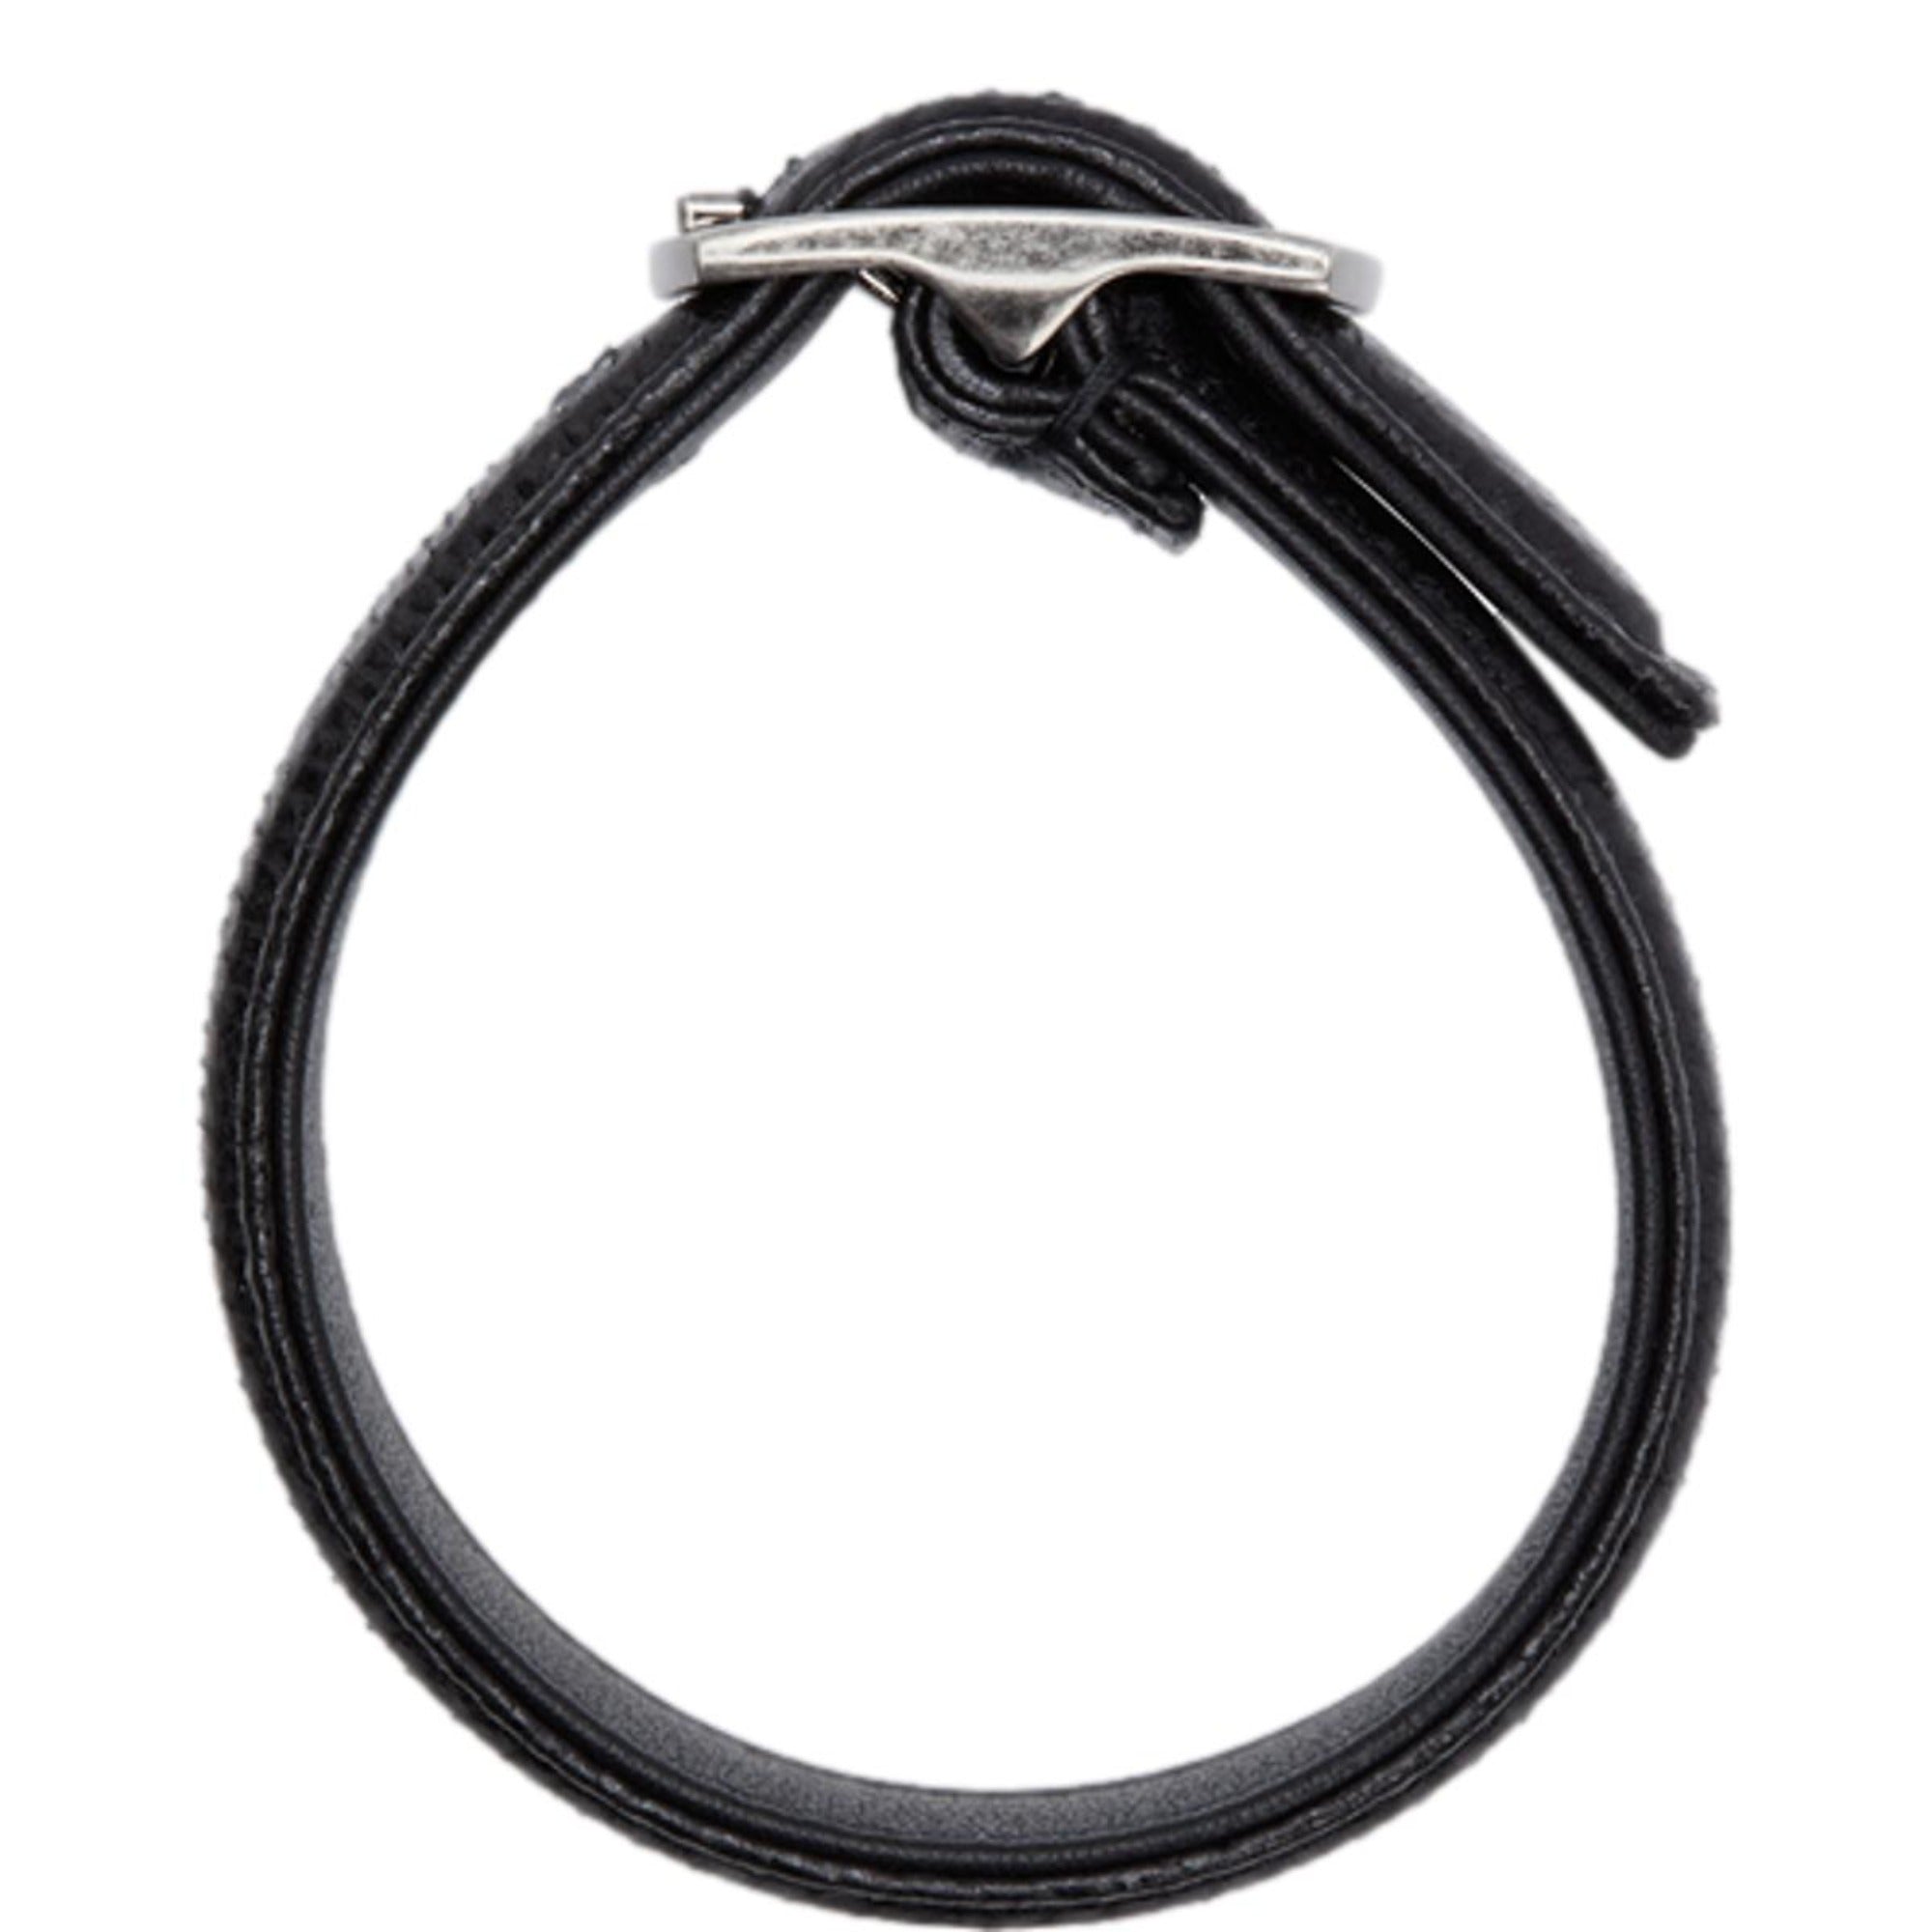 Saint Laurent Black Leather Snake Embossed Buckle Bracelet 634751 at_Queen_Bee_of_Beverly_Hills